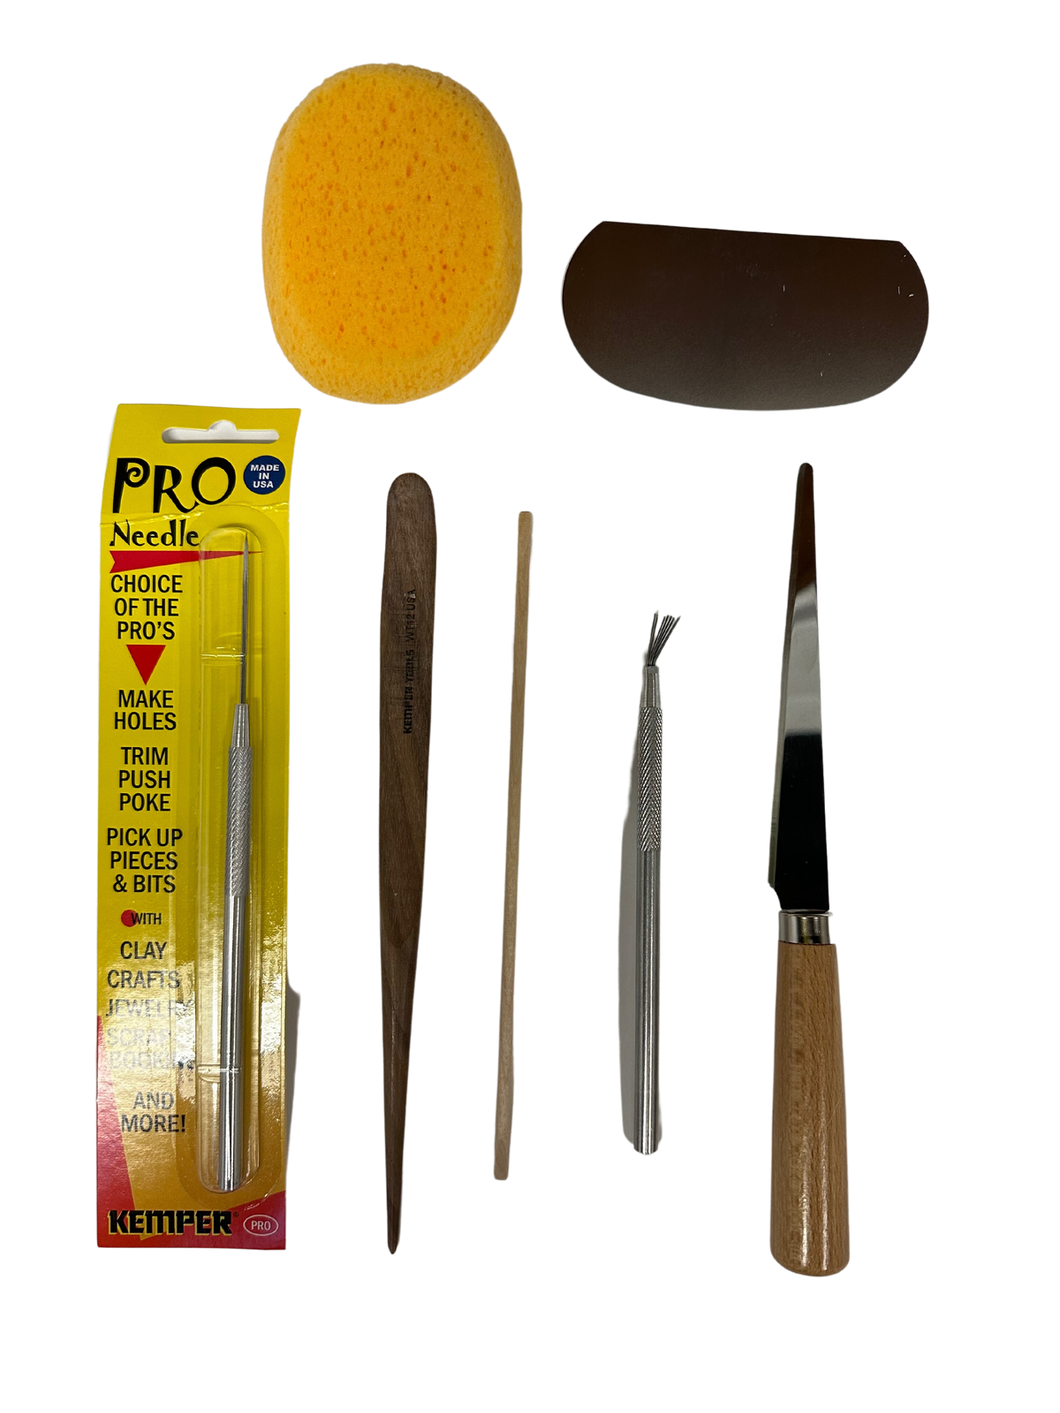 Fettling Knife, Metal Scraper, Needle Tool, Scoring Stick, Wood Model Tool, Manicure Stick, Sponge